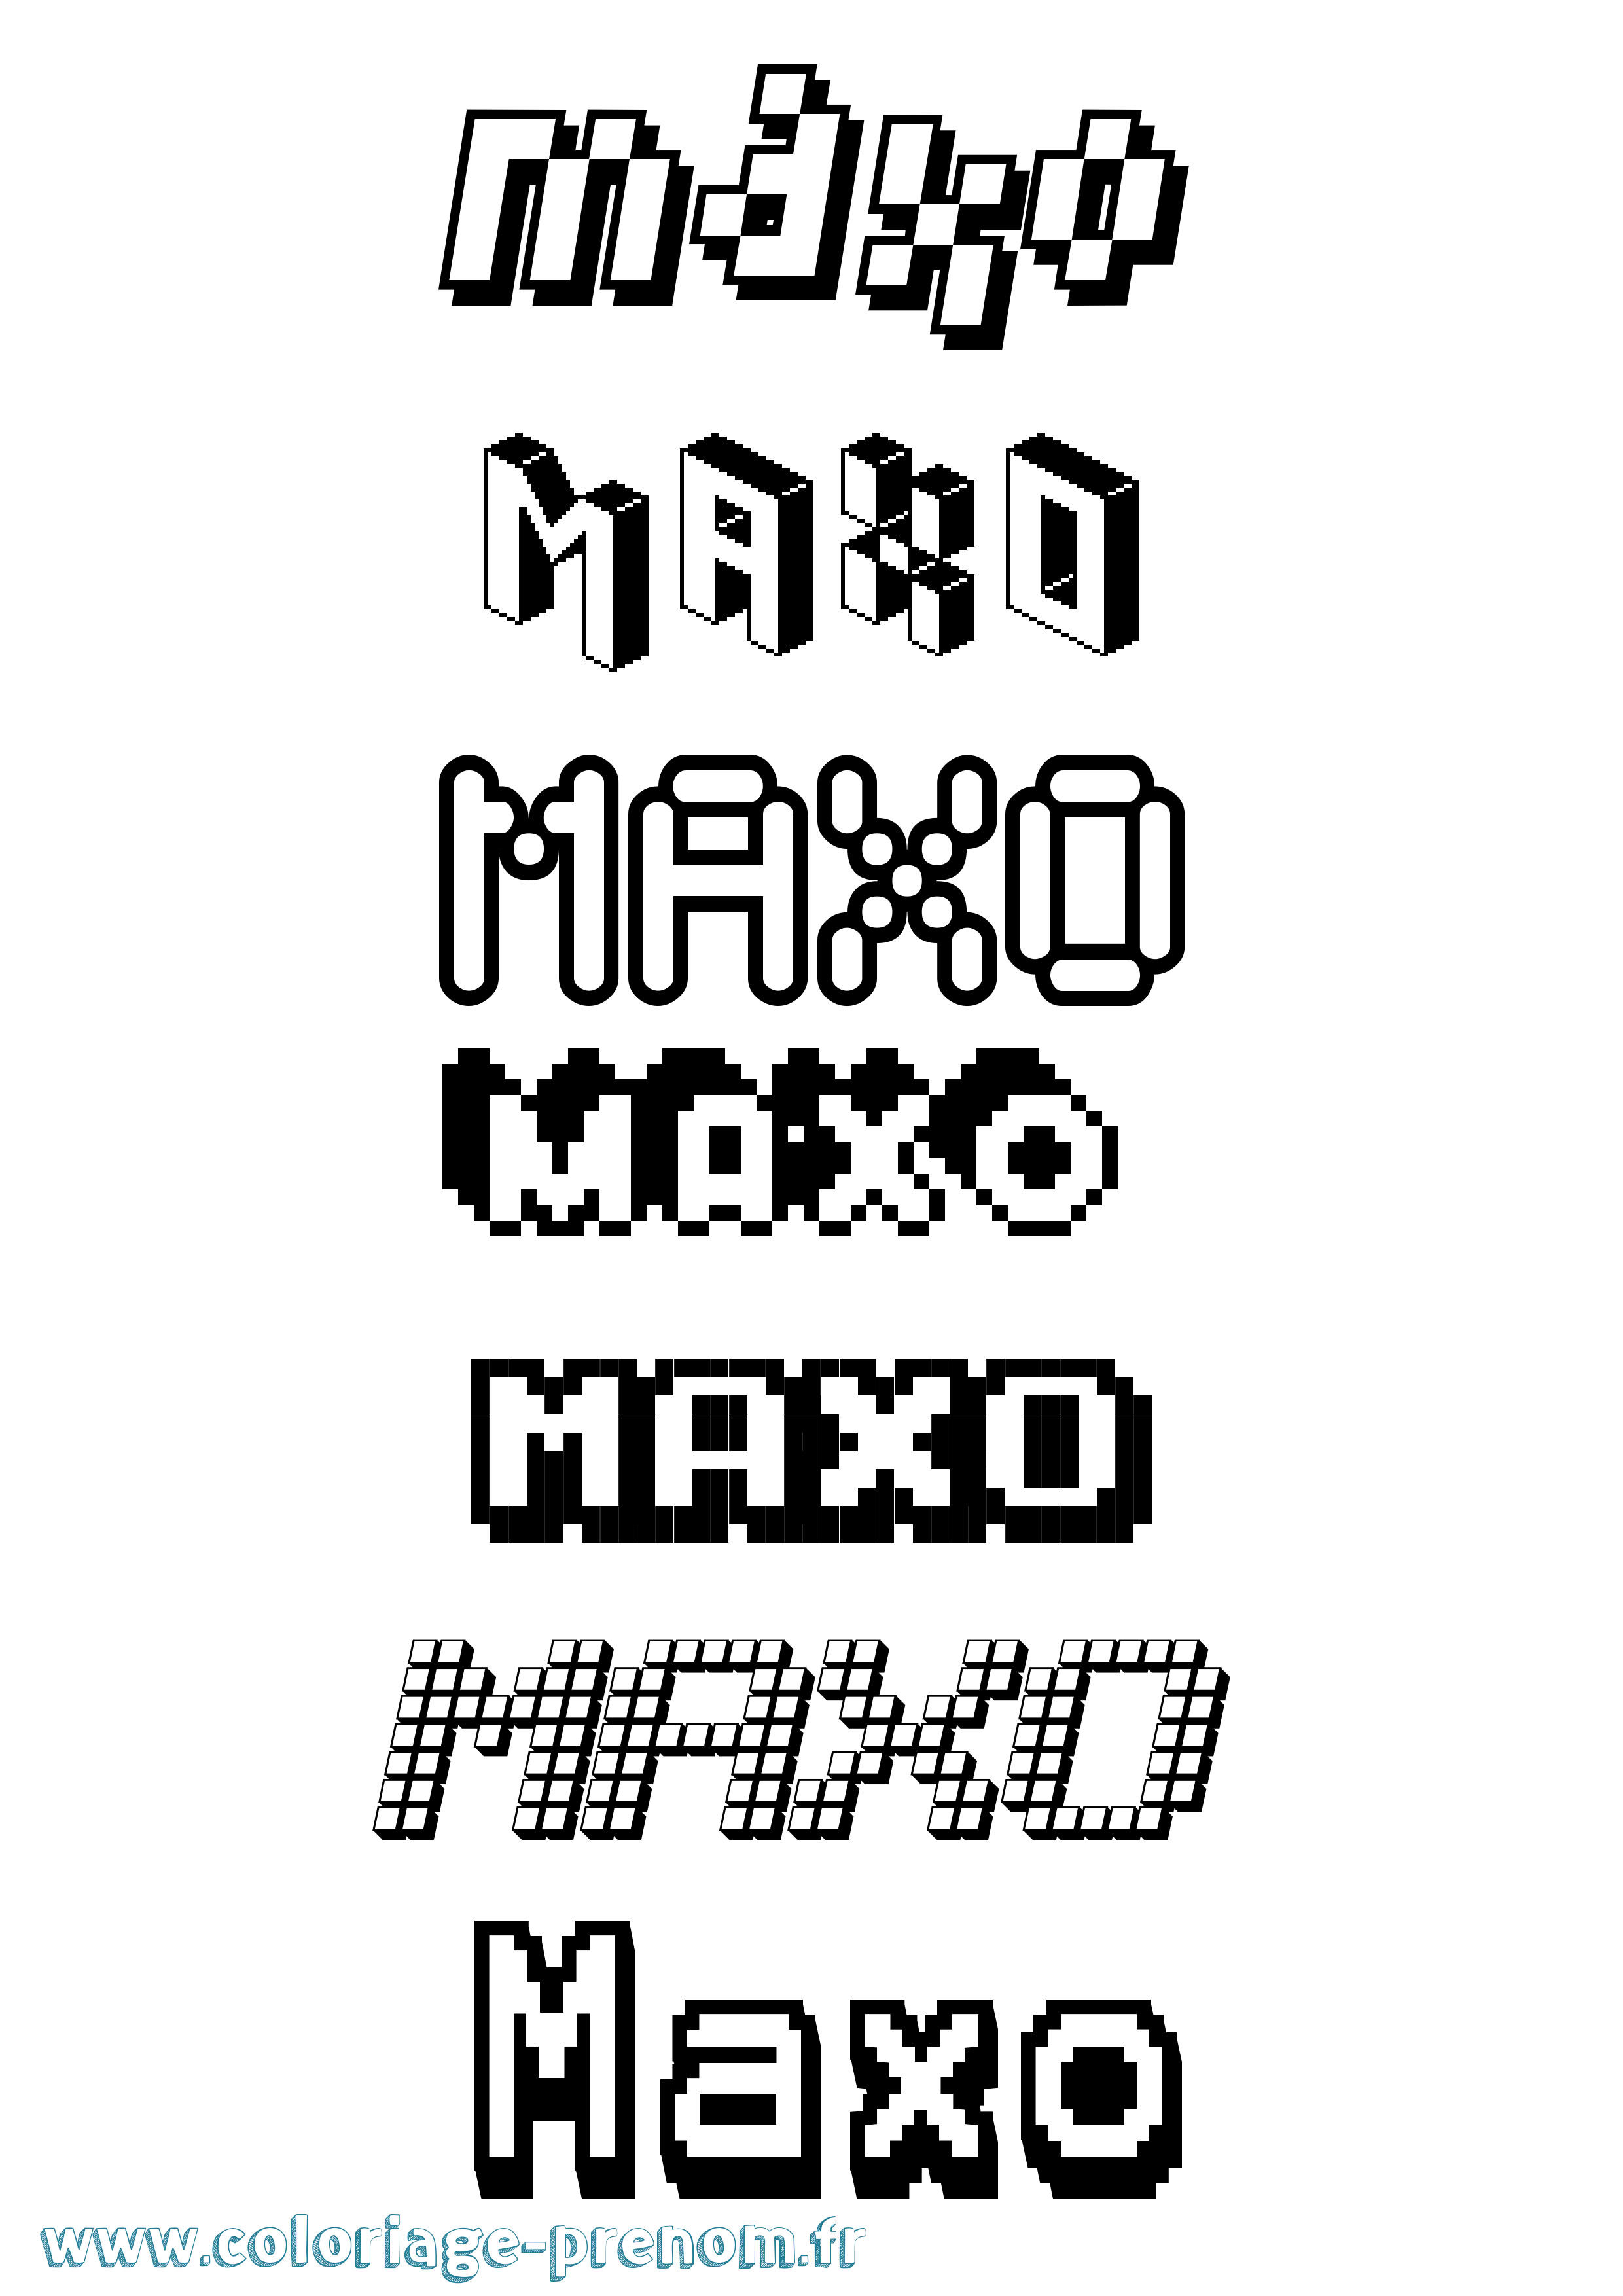 Coloriage prénom Maxo Pixel